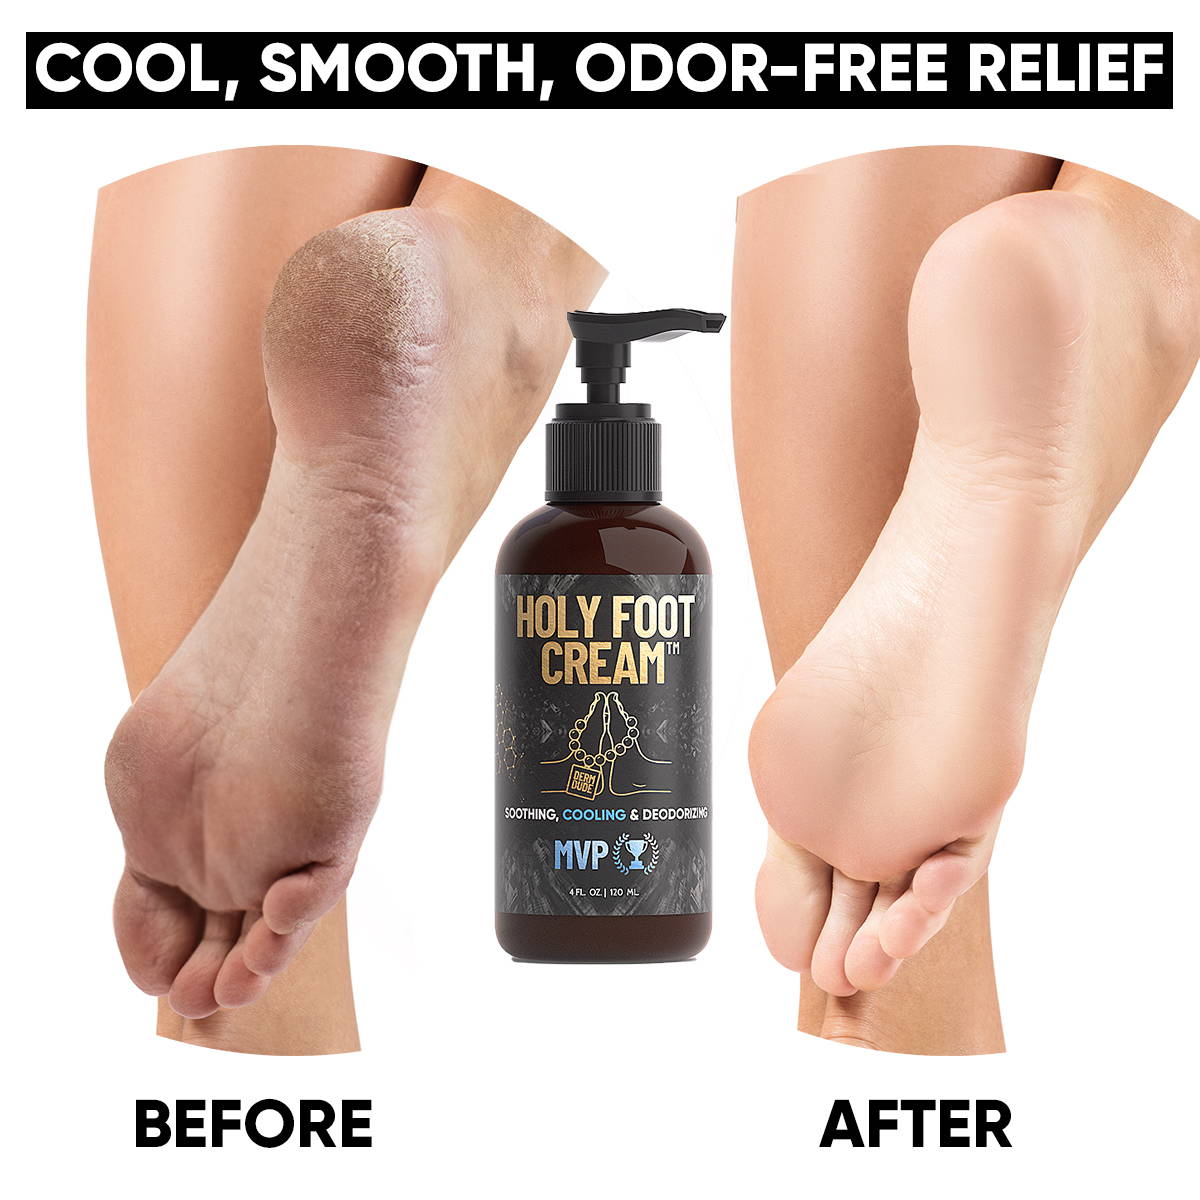 Odor free smooth feet